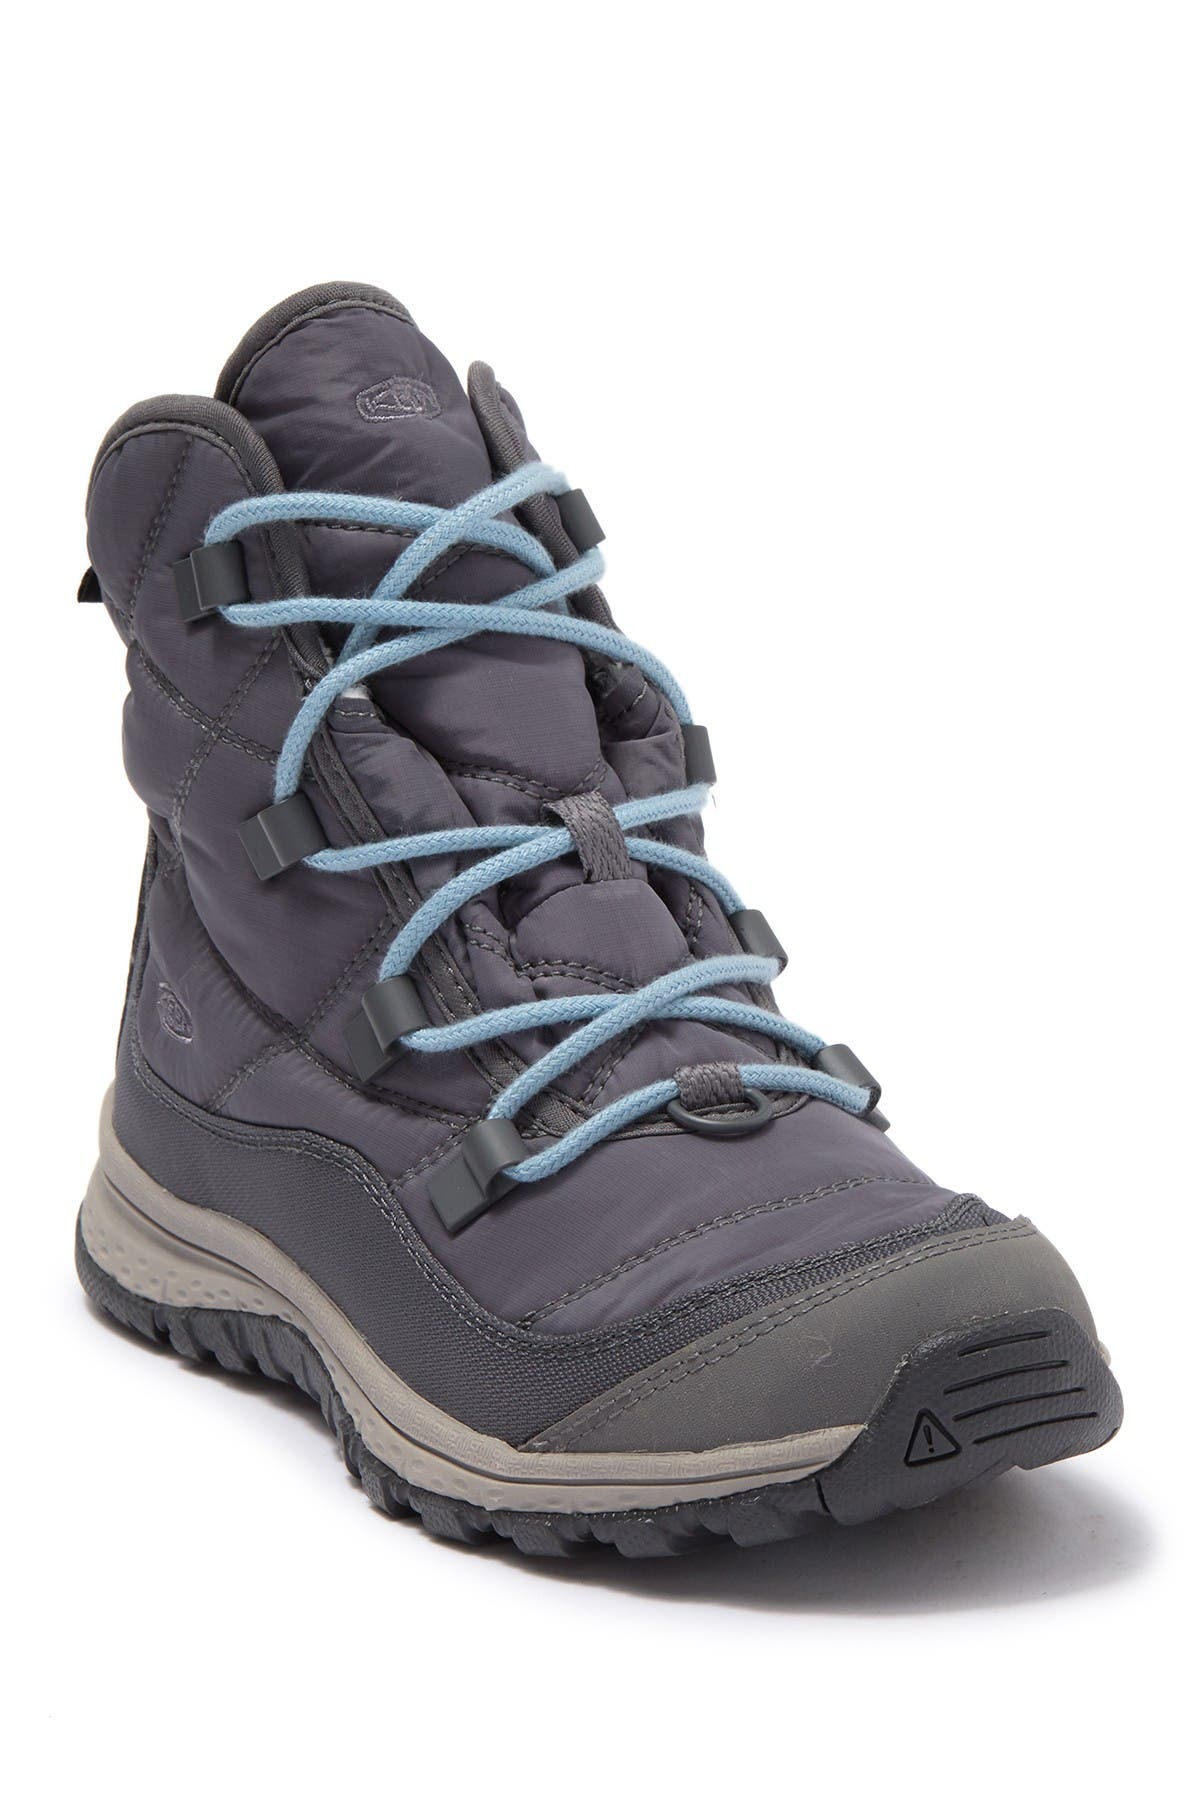 Keen | Terradora Ankle Waterproof Boot 